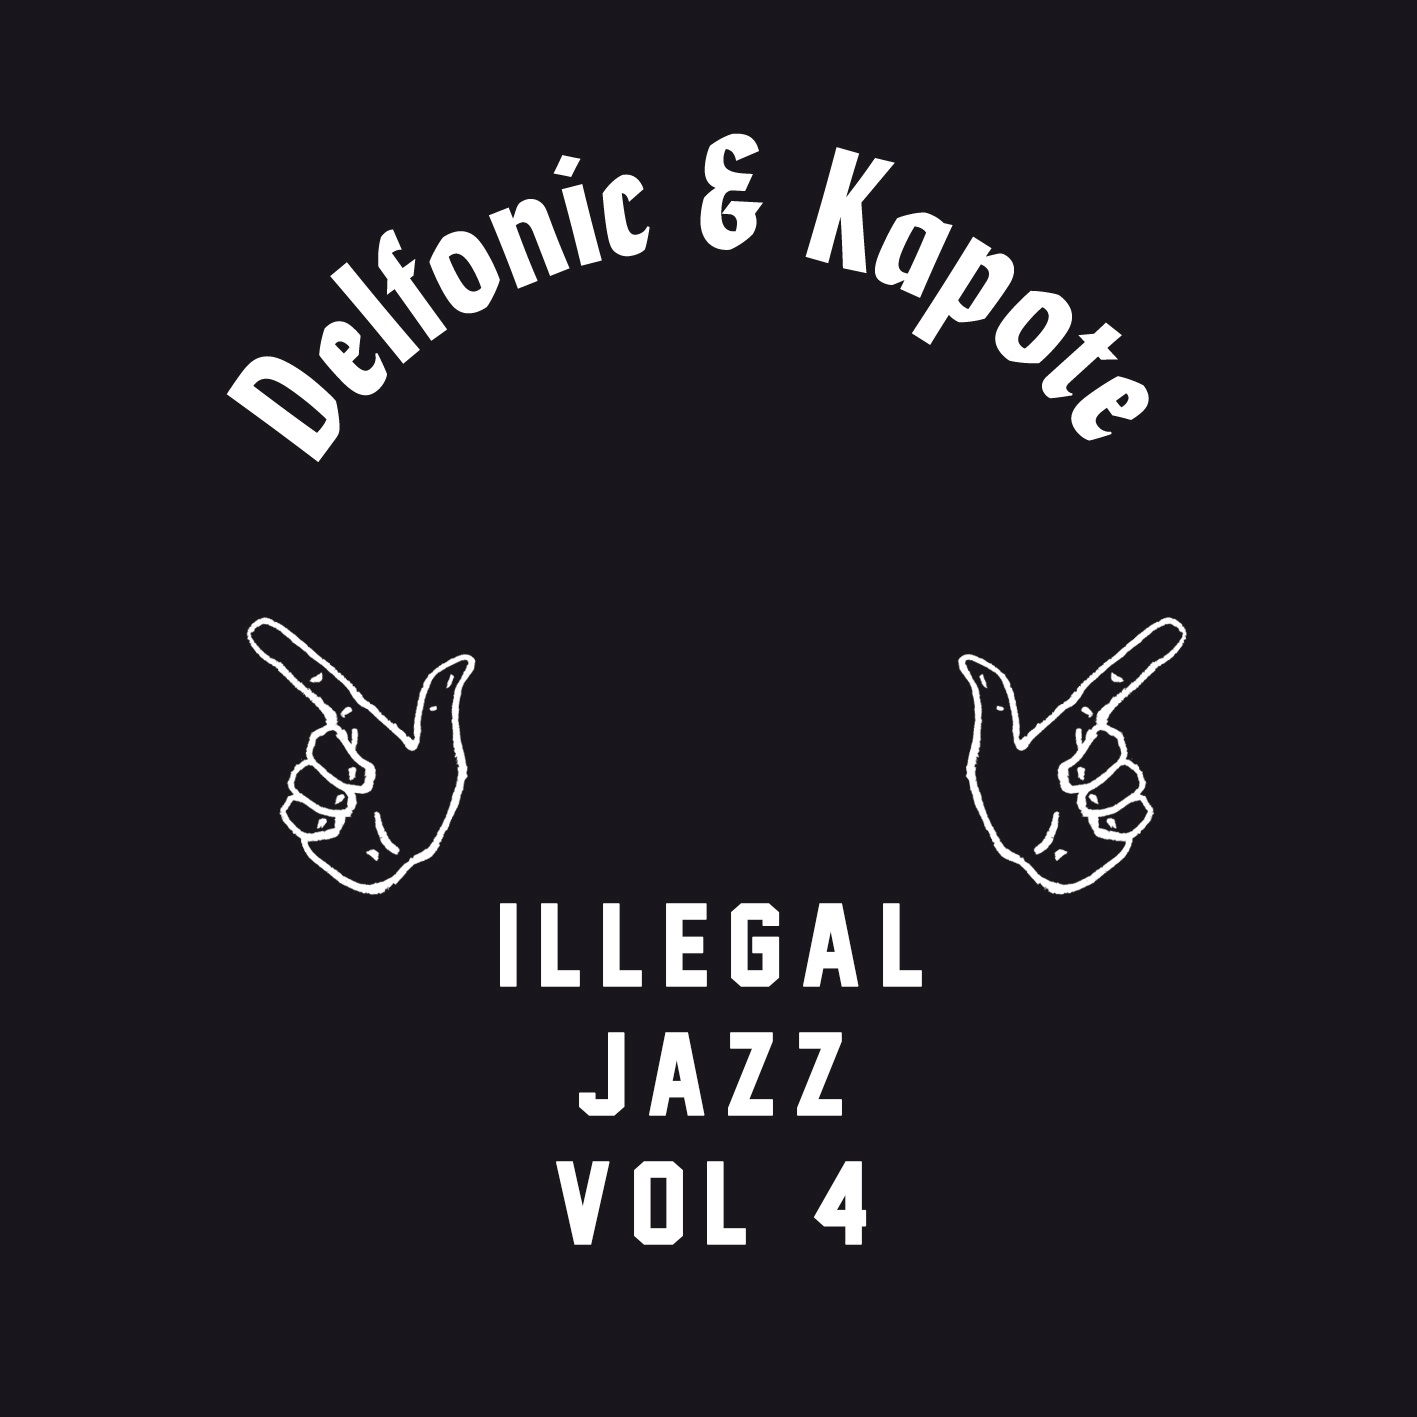 Delfonic & Kapote – Illegal Jazz Vol. 4  [IJR004]